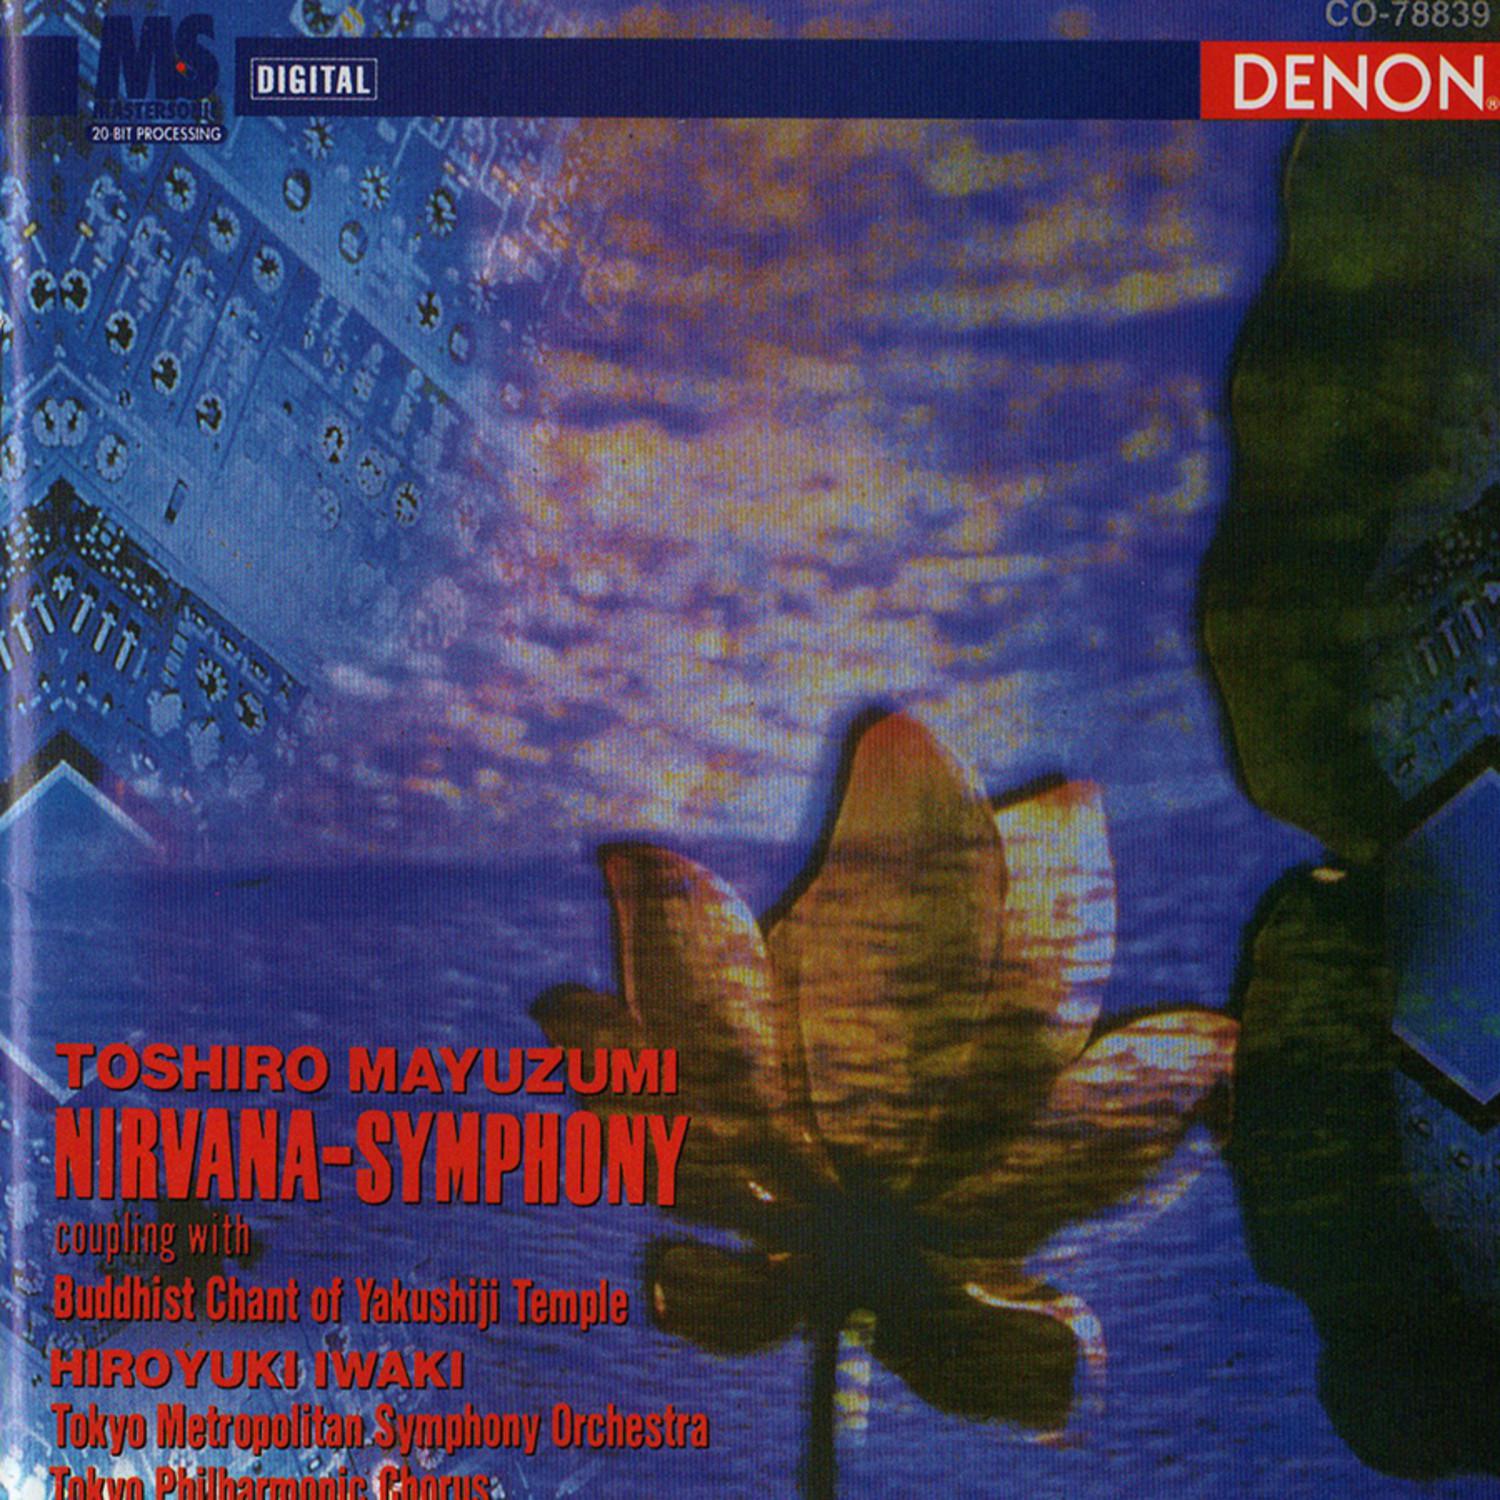 Nirvana-Symphony: V. Campanology III